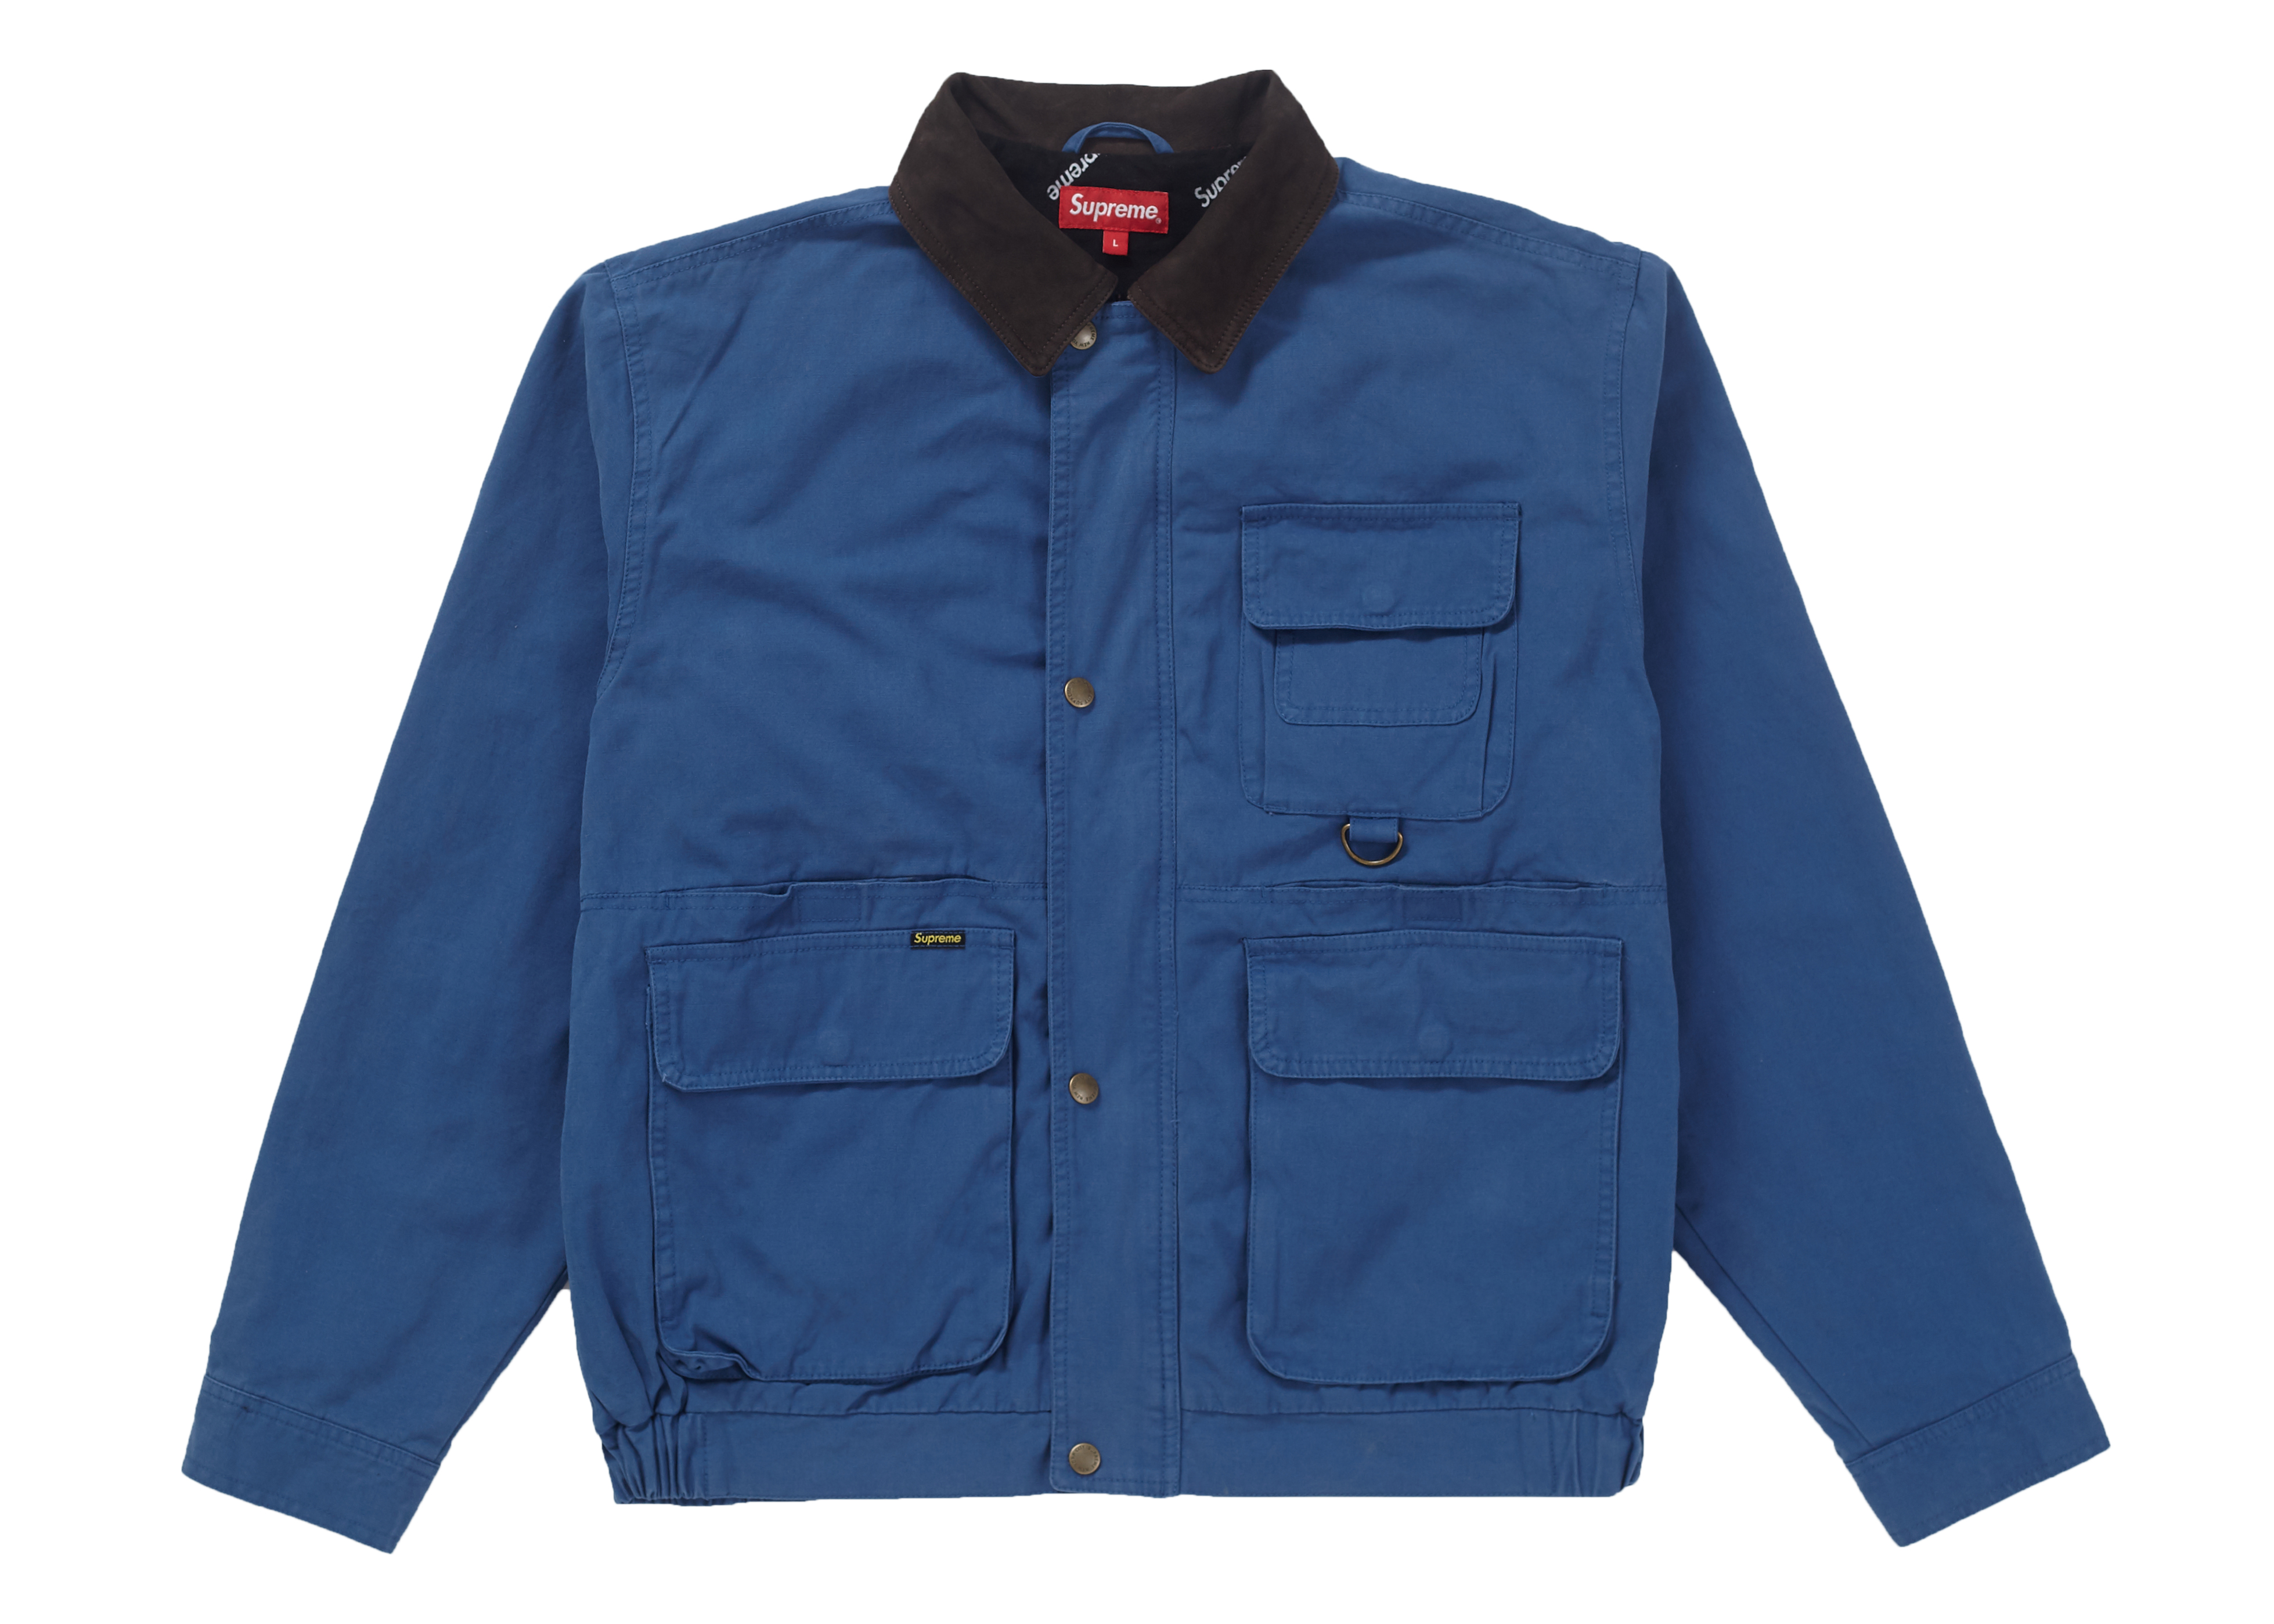 Supreme field jacket blue 青 レザー 18aw